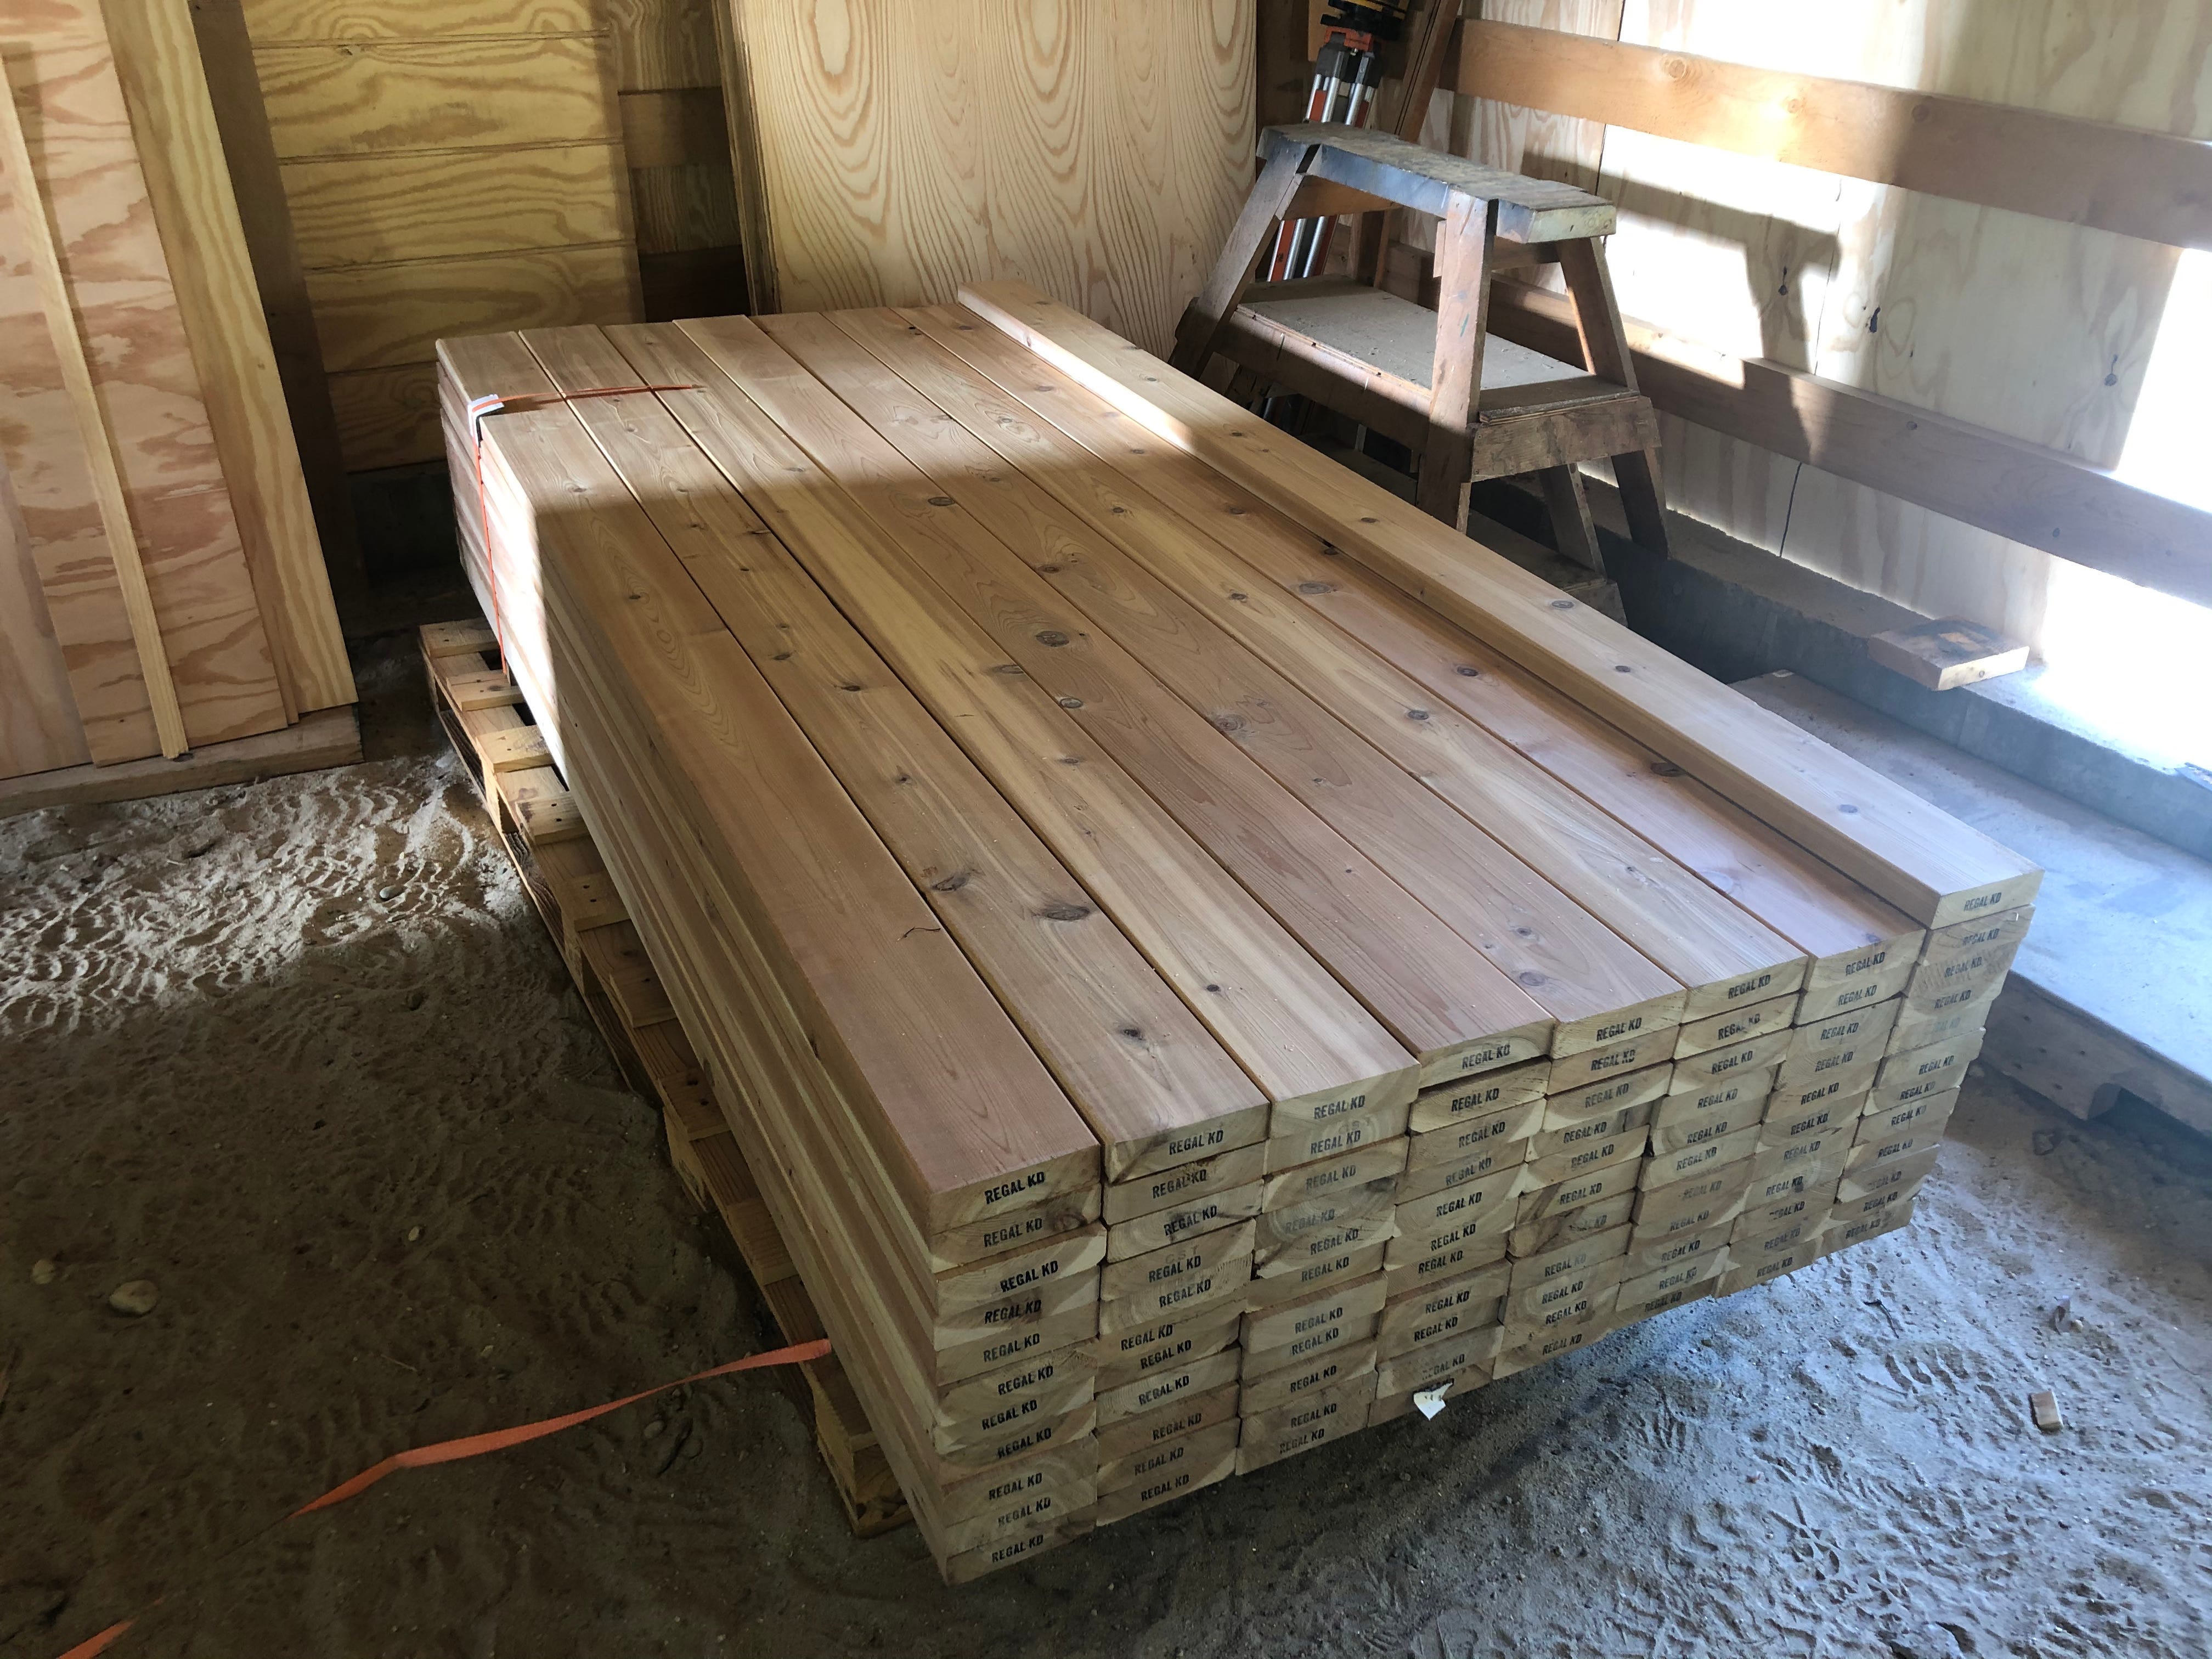 Heat Cold Building A Wood Fired Barrel Sauna By Will Szal Medium